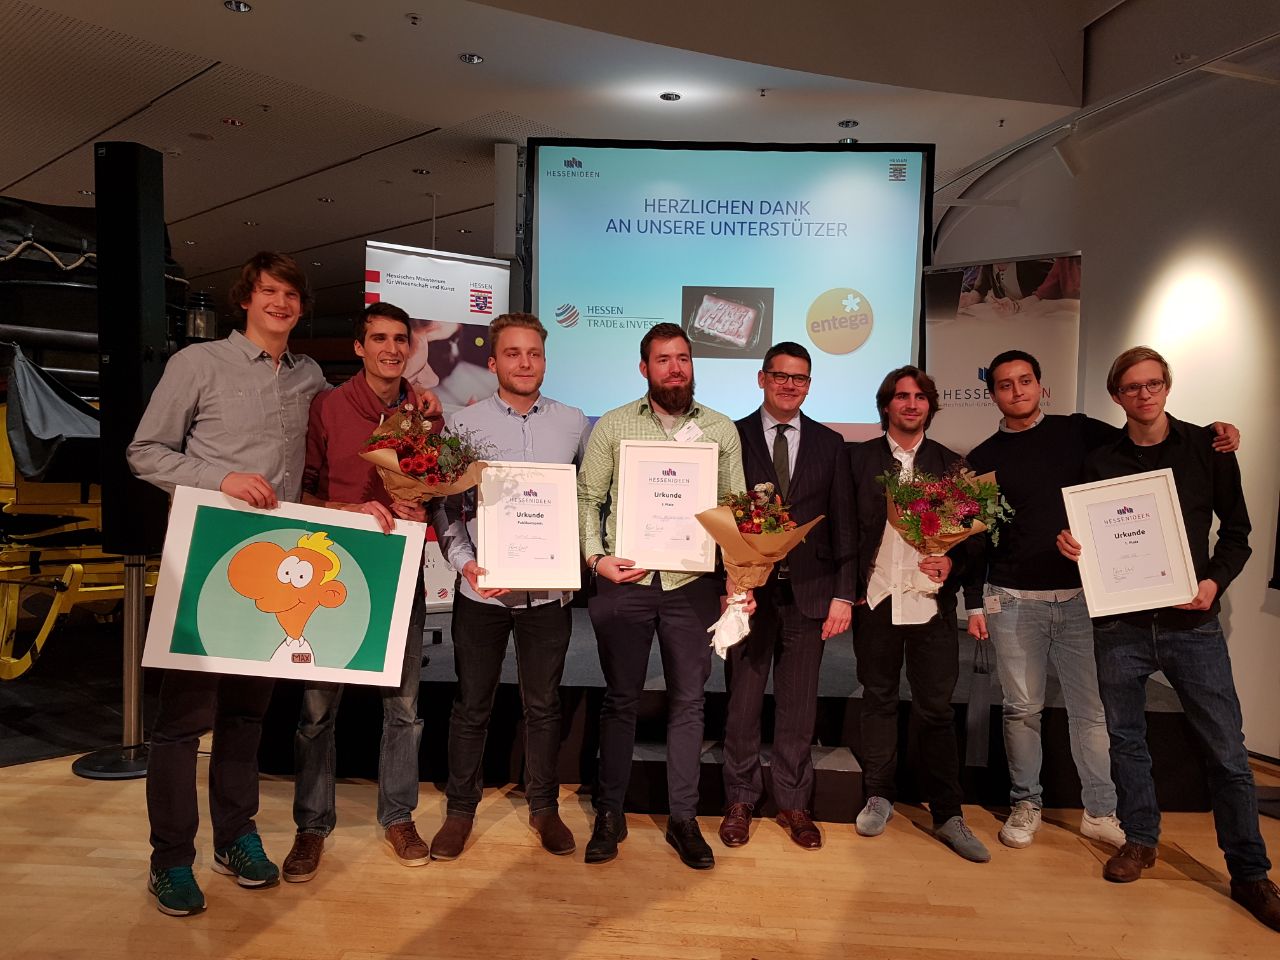 Floating Office gewinnt Publikumspreis bei Hessen Ideen 2017